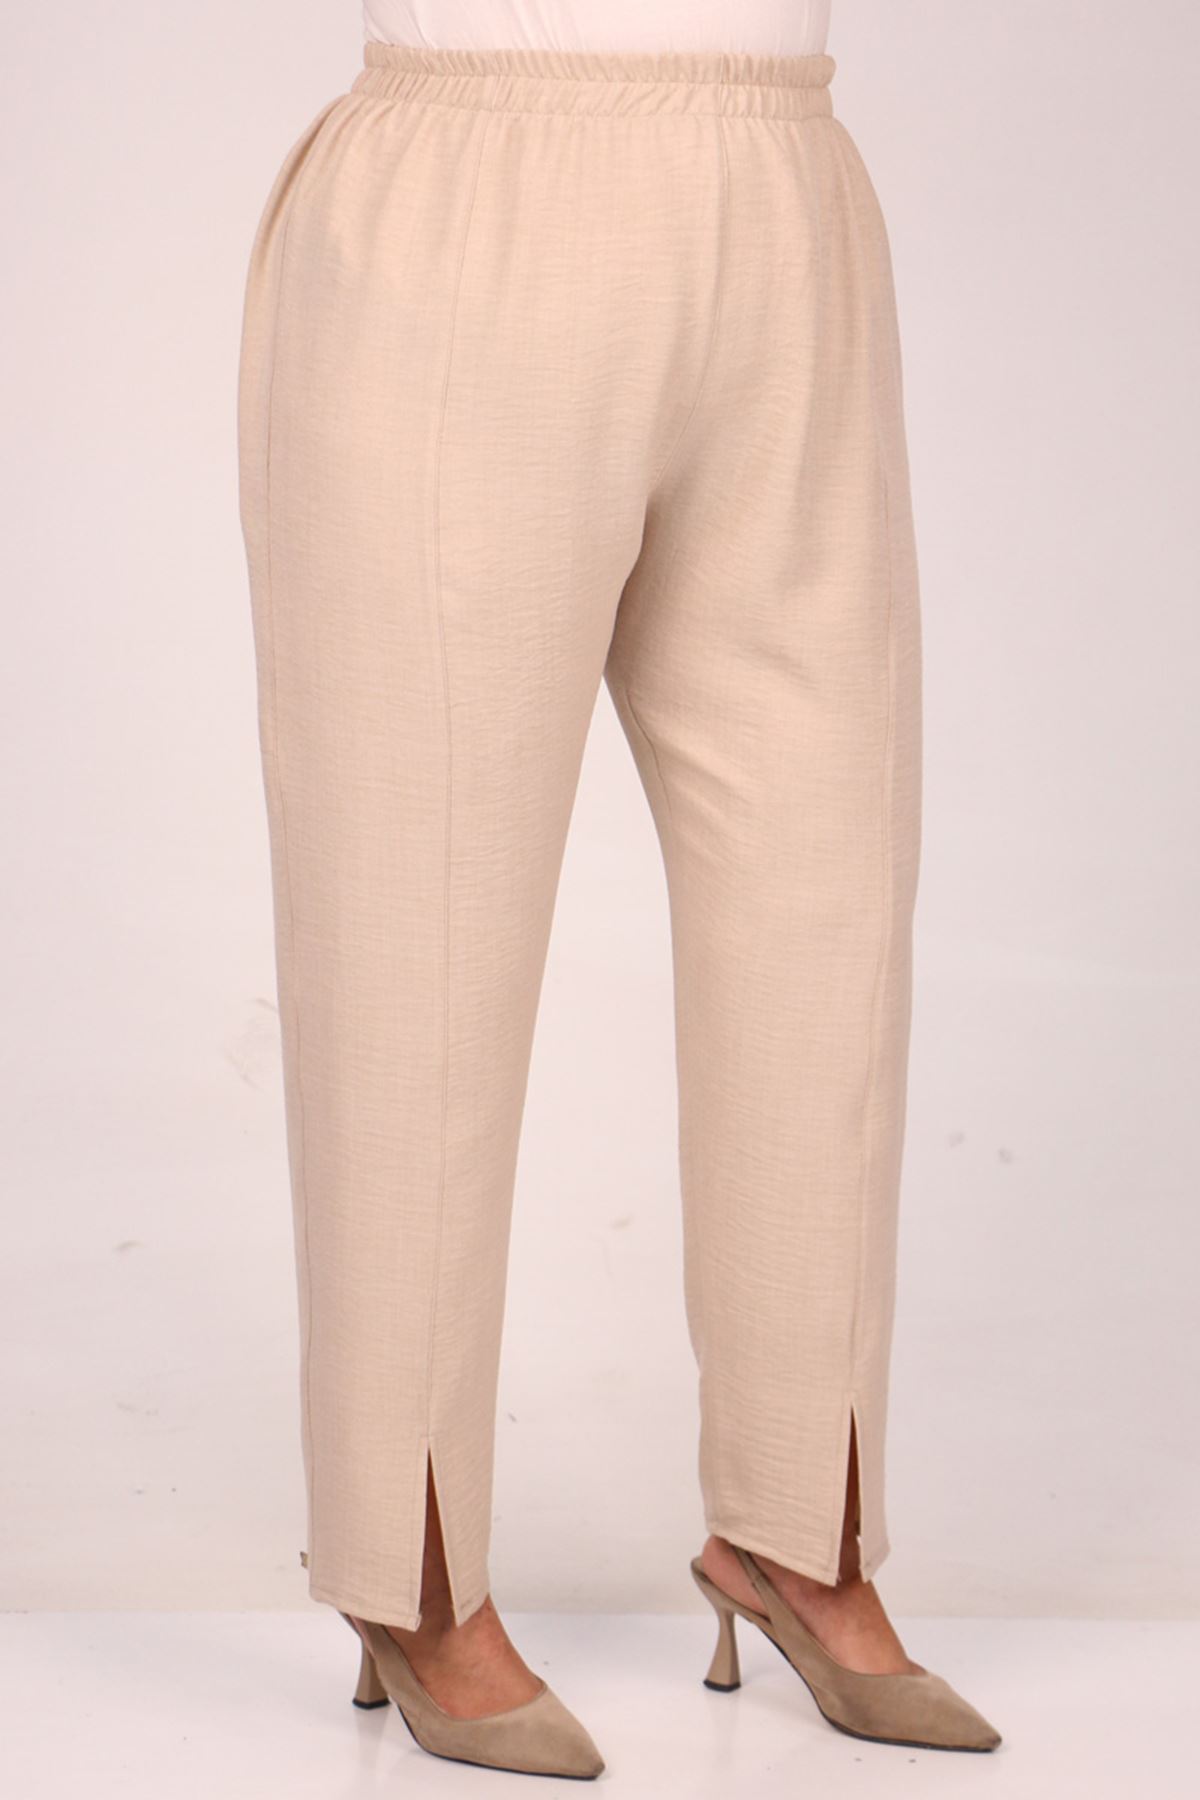 37038 Large Size Linen Airobin Button Detailed Trousers Suit -Beige